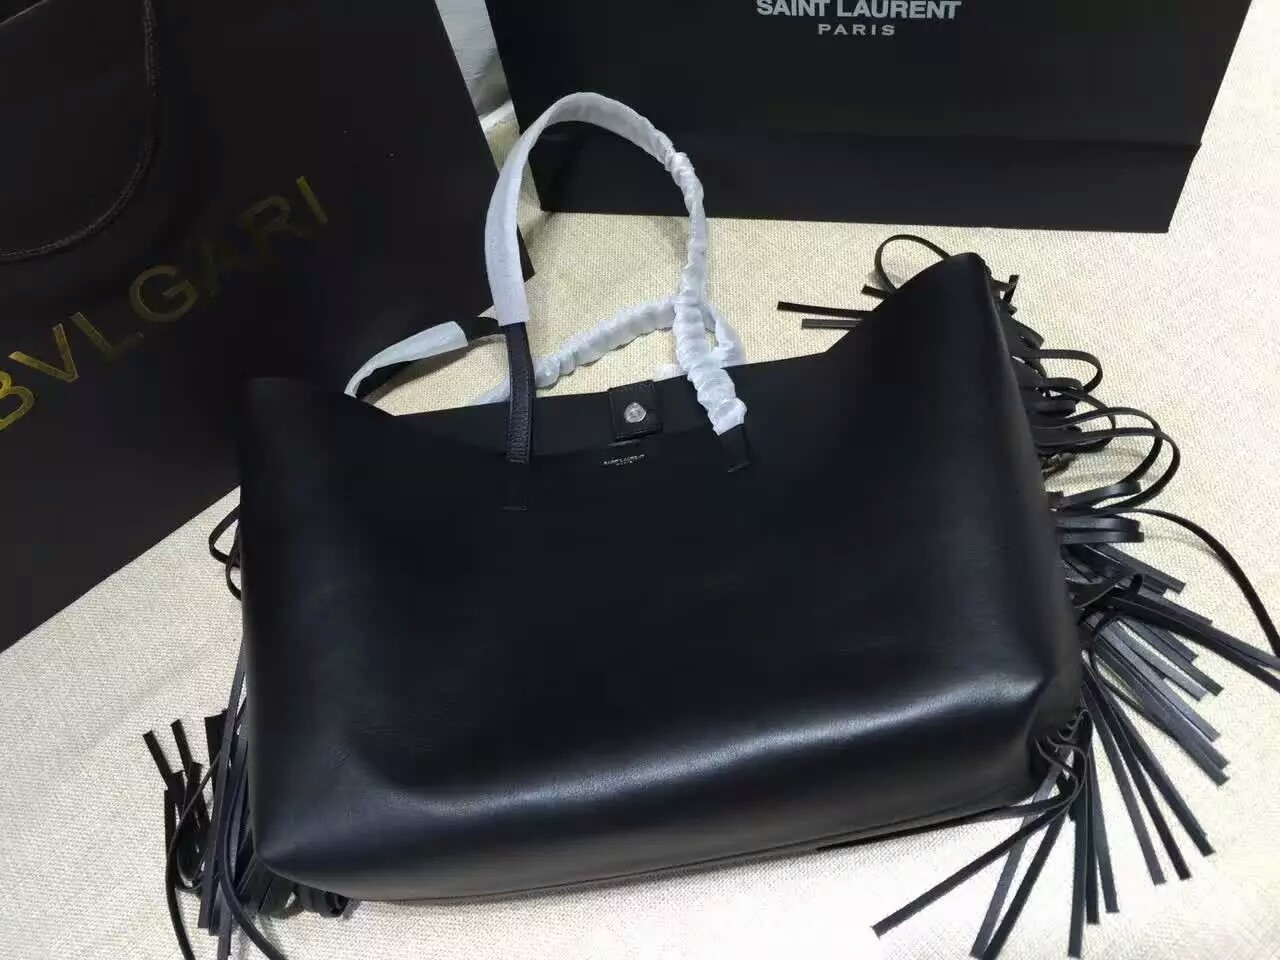 2016 New Saint Laurent Bag Cheap Sale-Saint Laurent Large Shopping Tote Bag in Black Leather - Click Image to Close